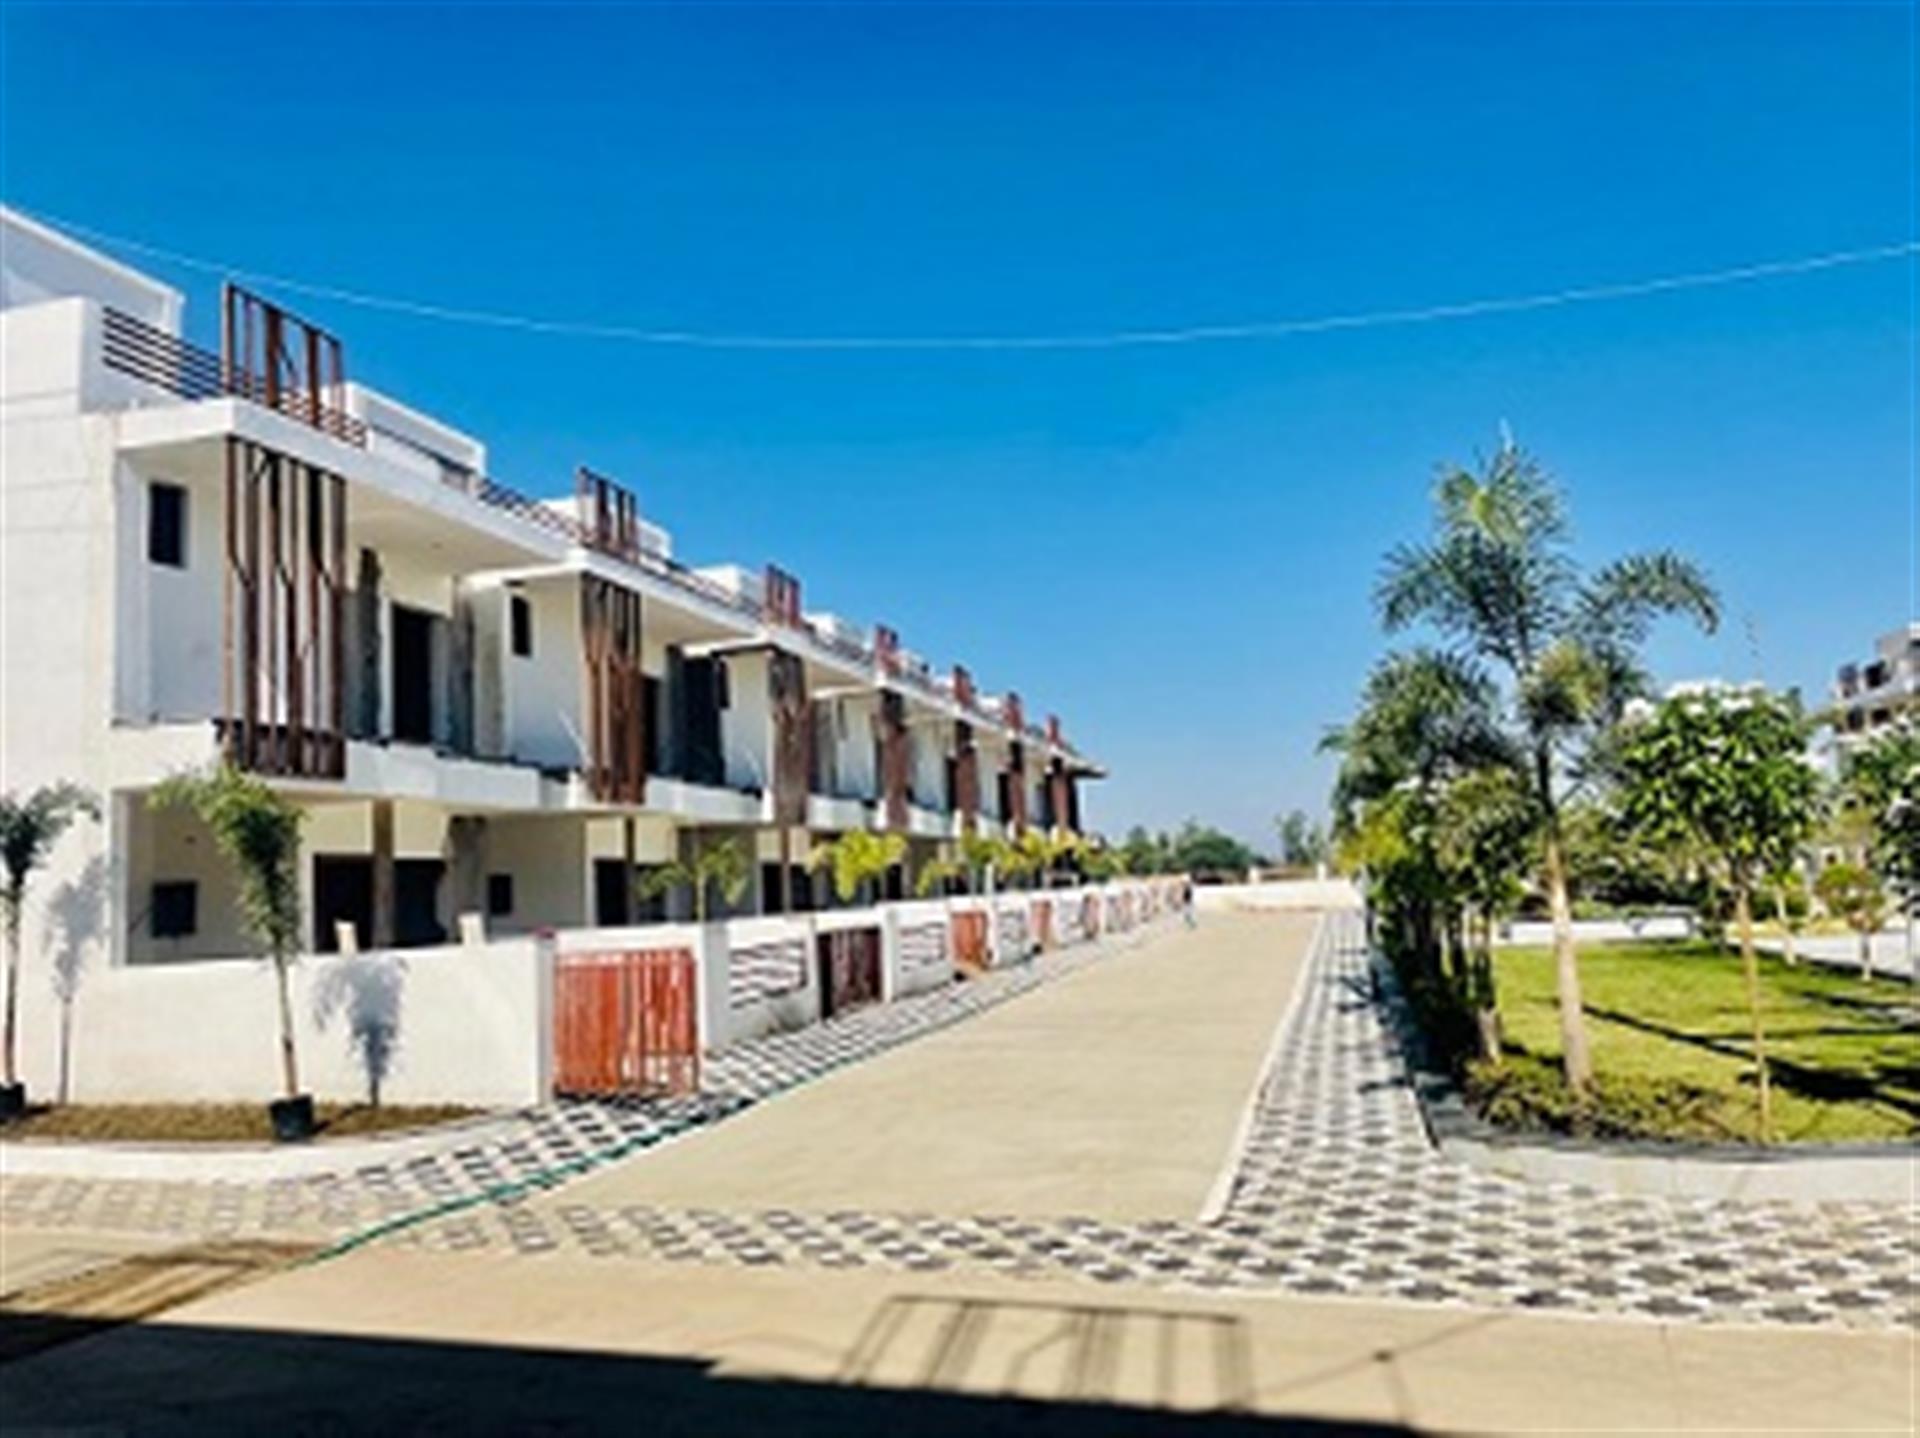 sage-milestone-duplex-hoshangabad-road-bhopal-3-4bhk-villas-residential-plots-villa-house